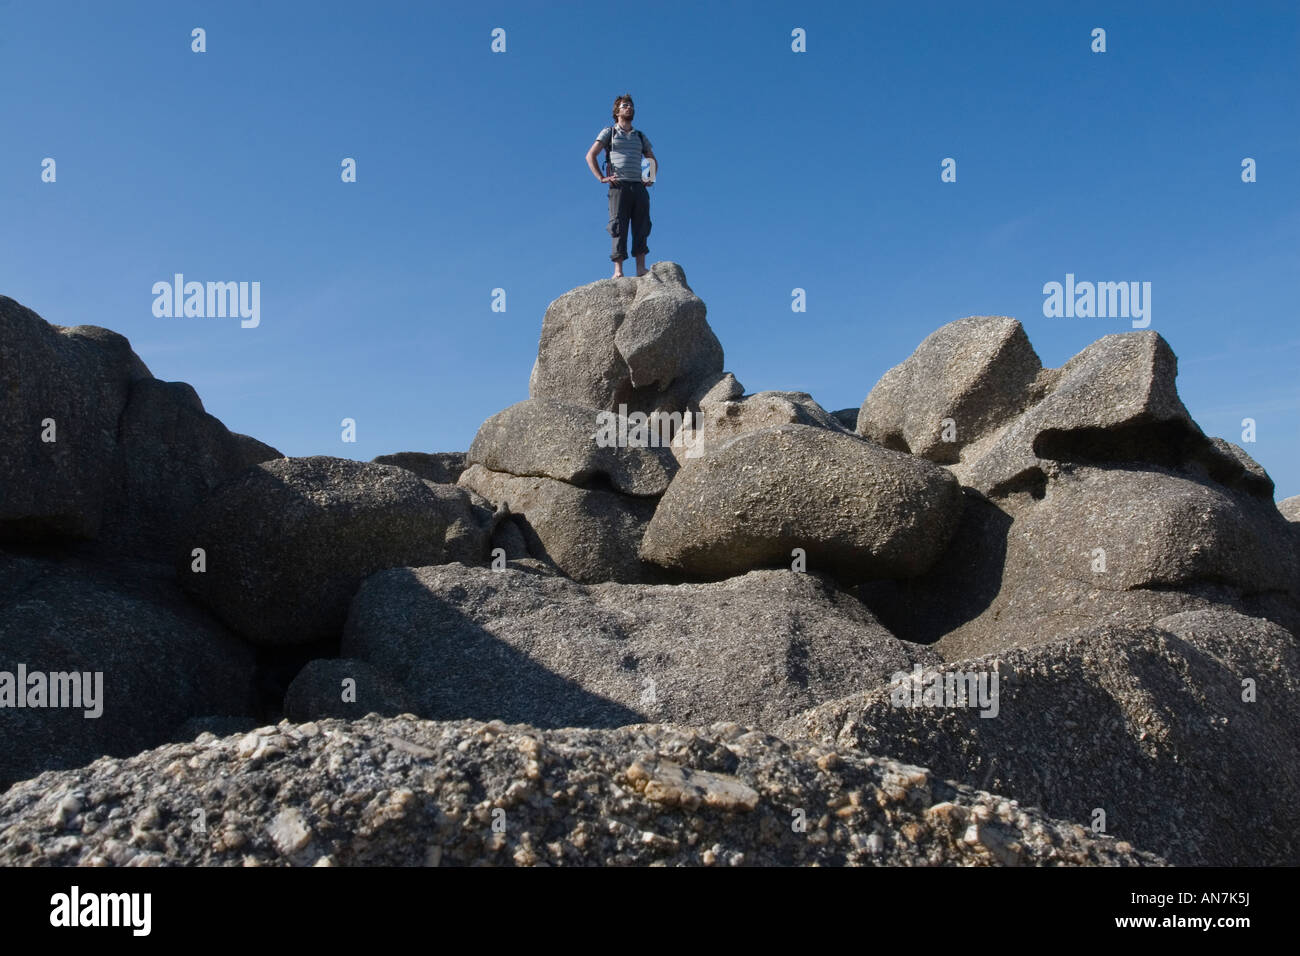 Man Standing on Rock Stock Photo